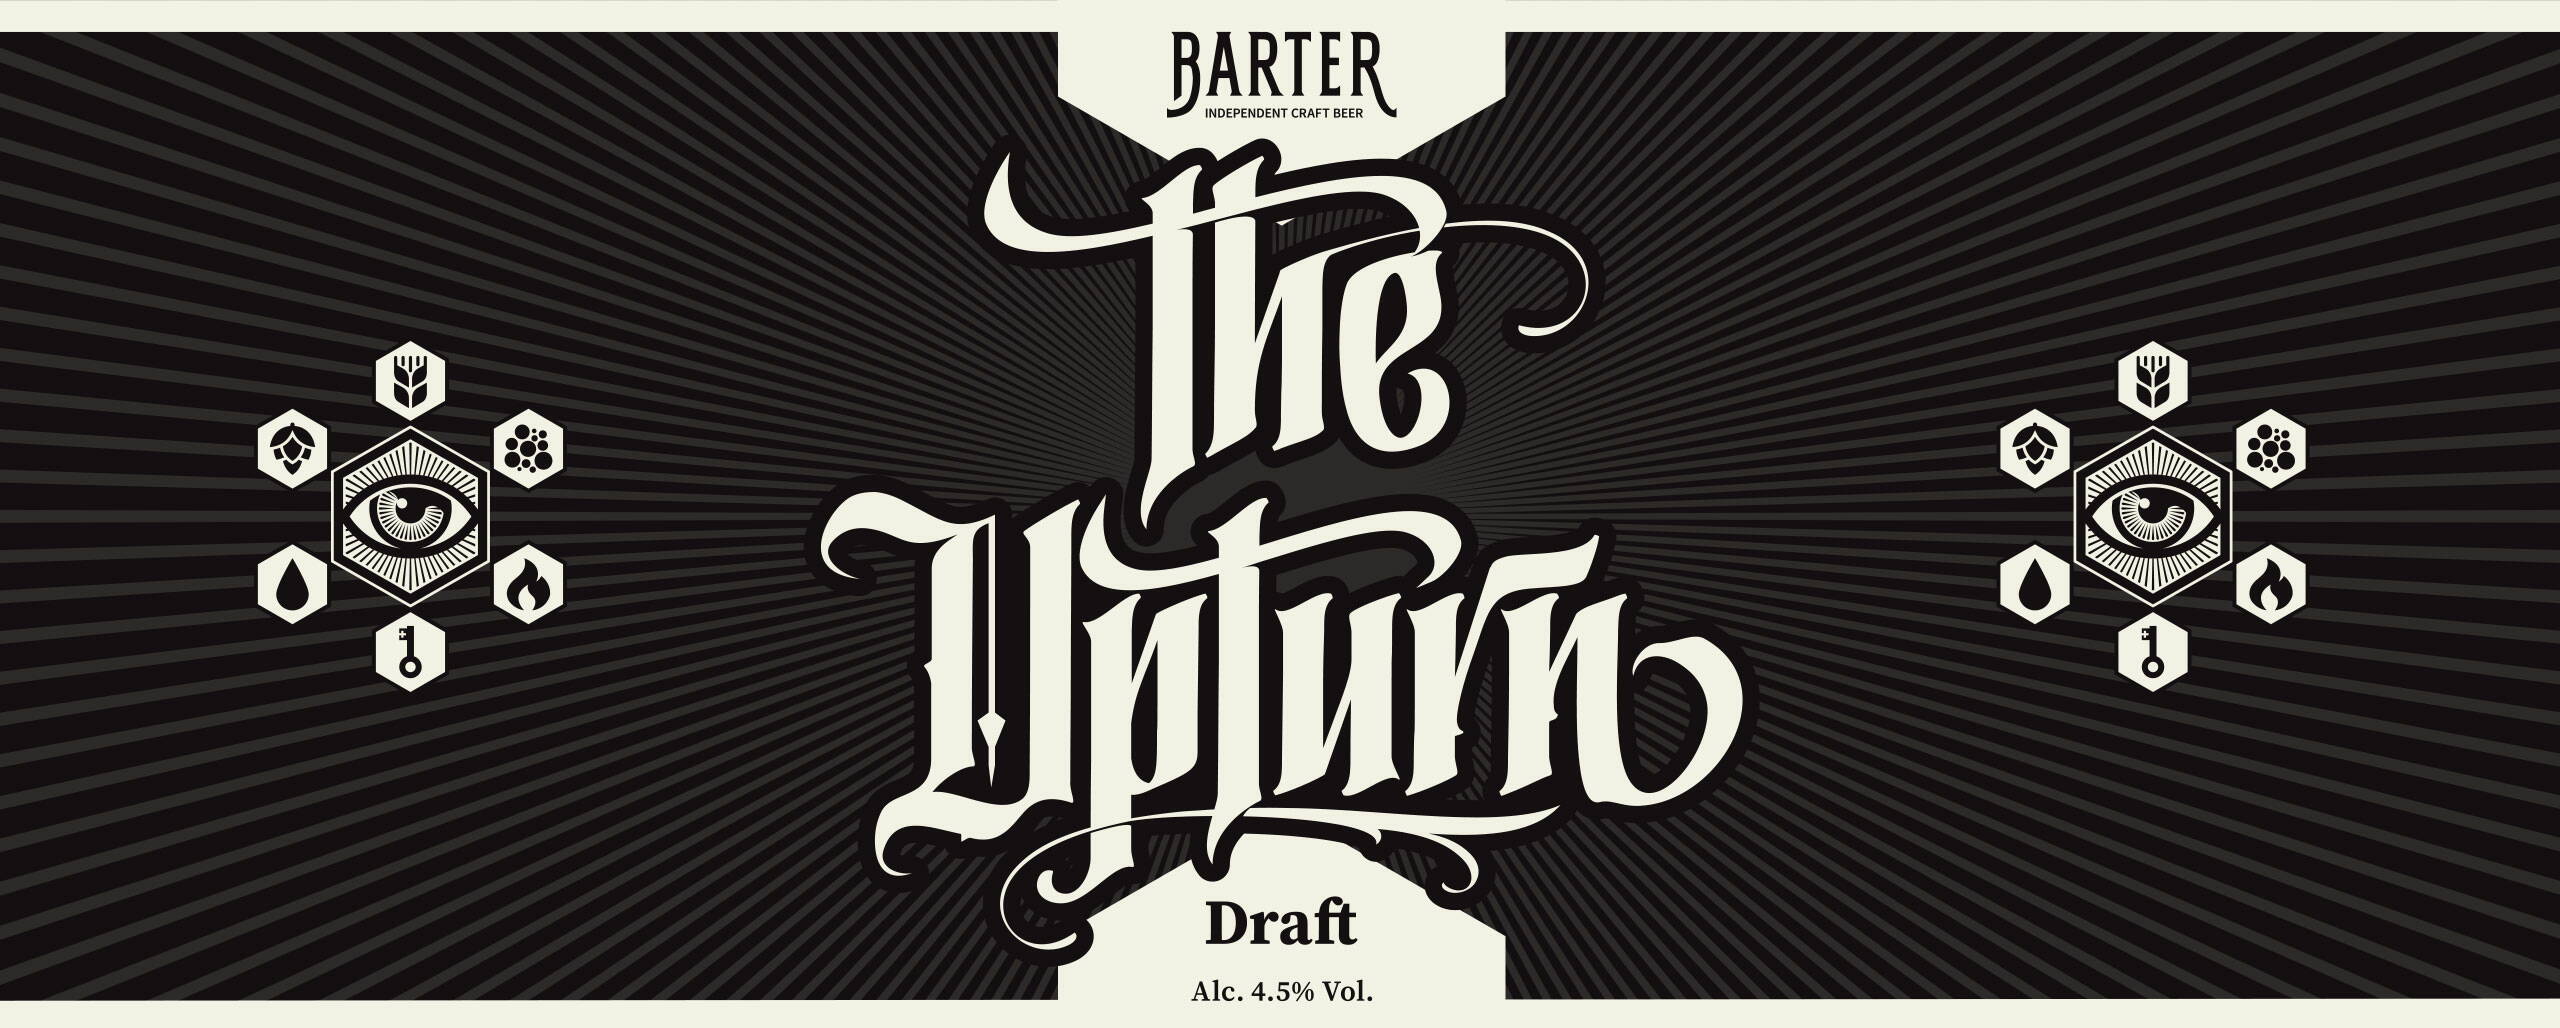 The Upturn – Barter Independent Craft Beer